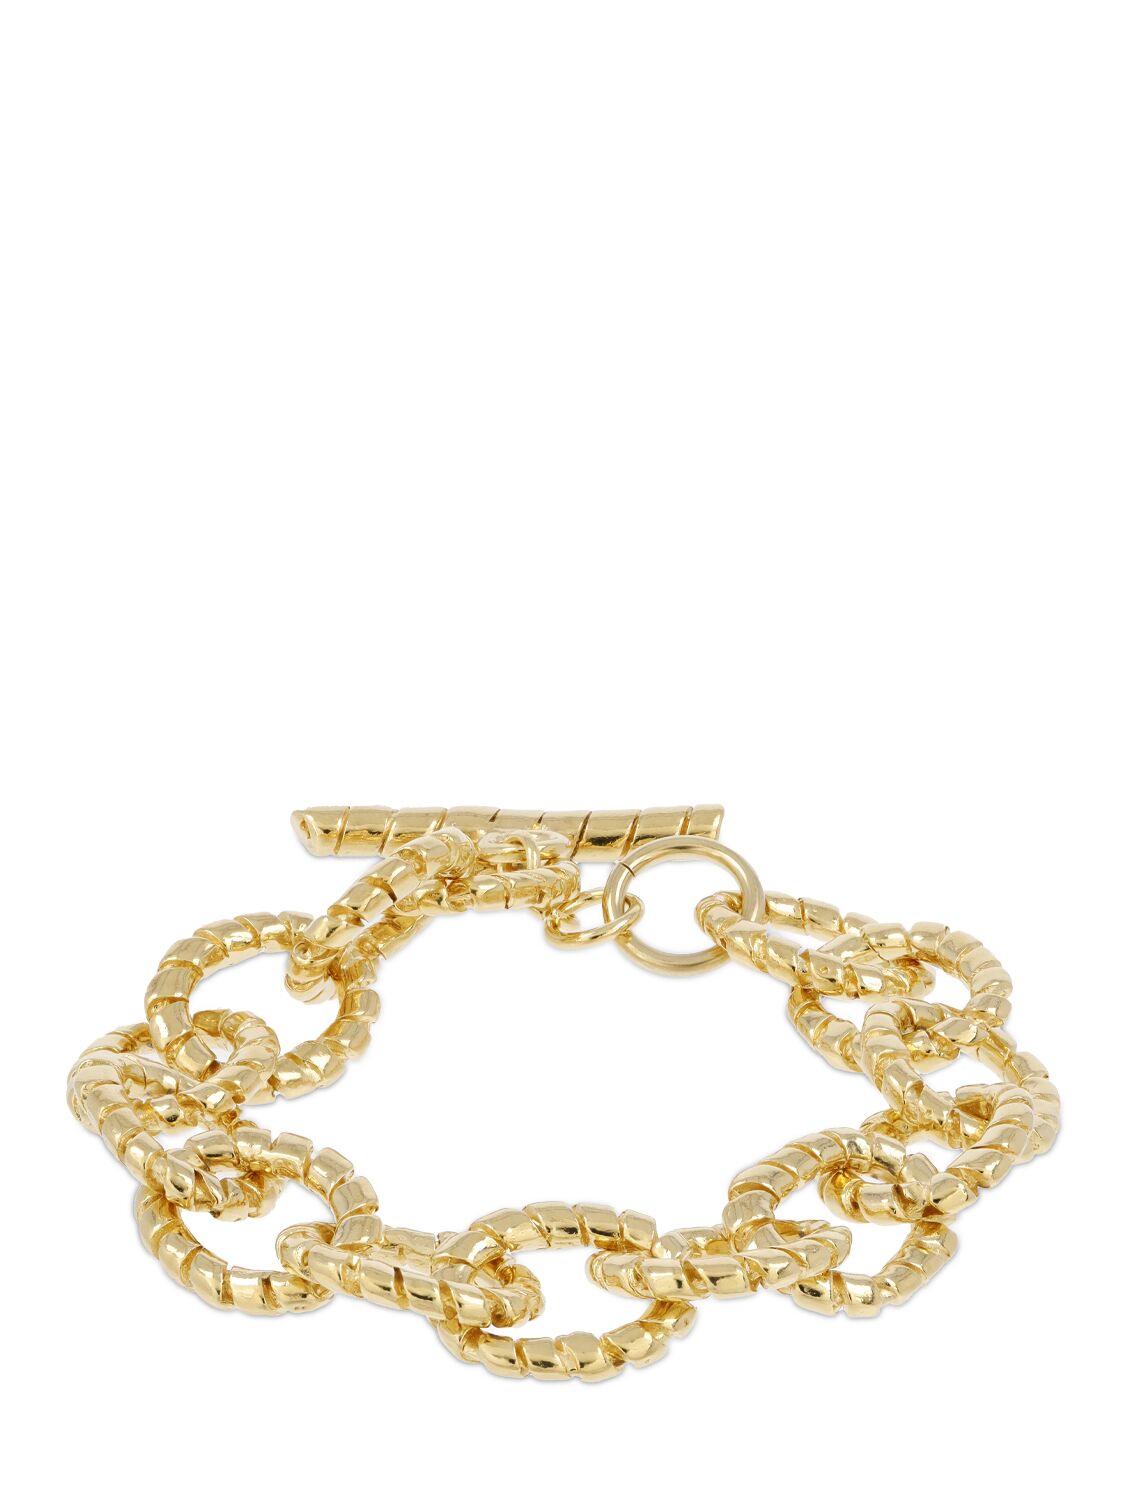 Paola Sighinolfi Cress Chain Bracelet In Gold